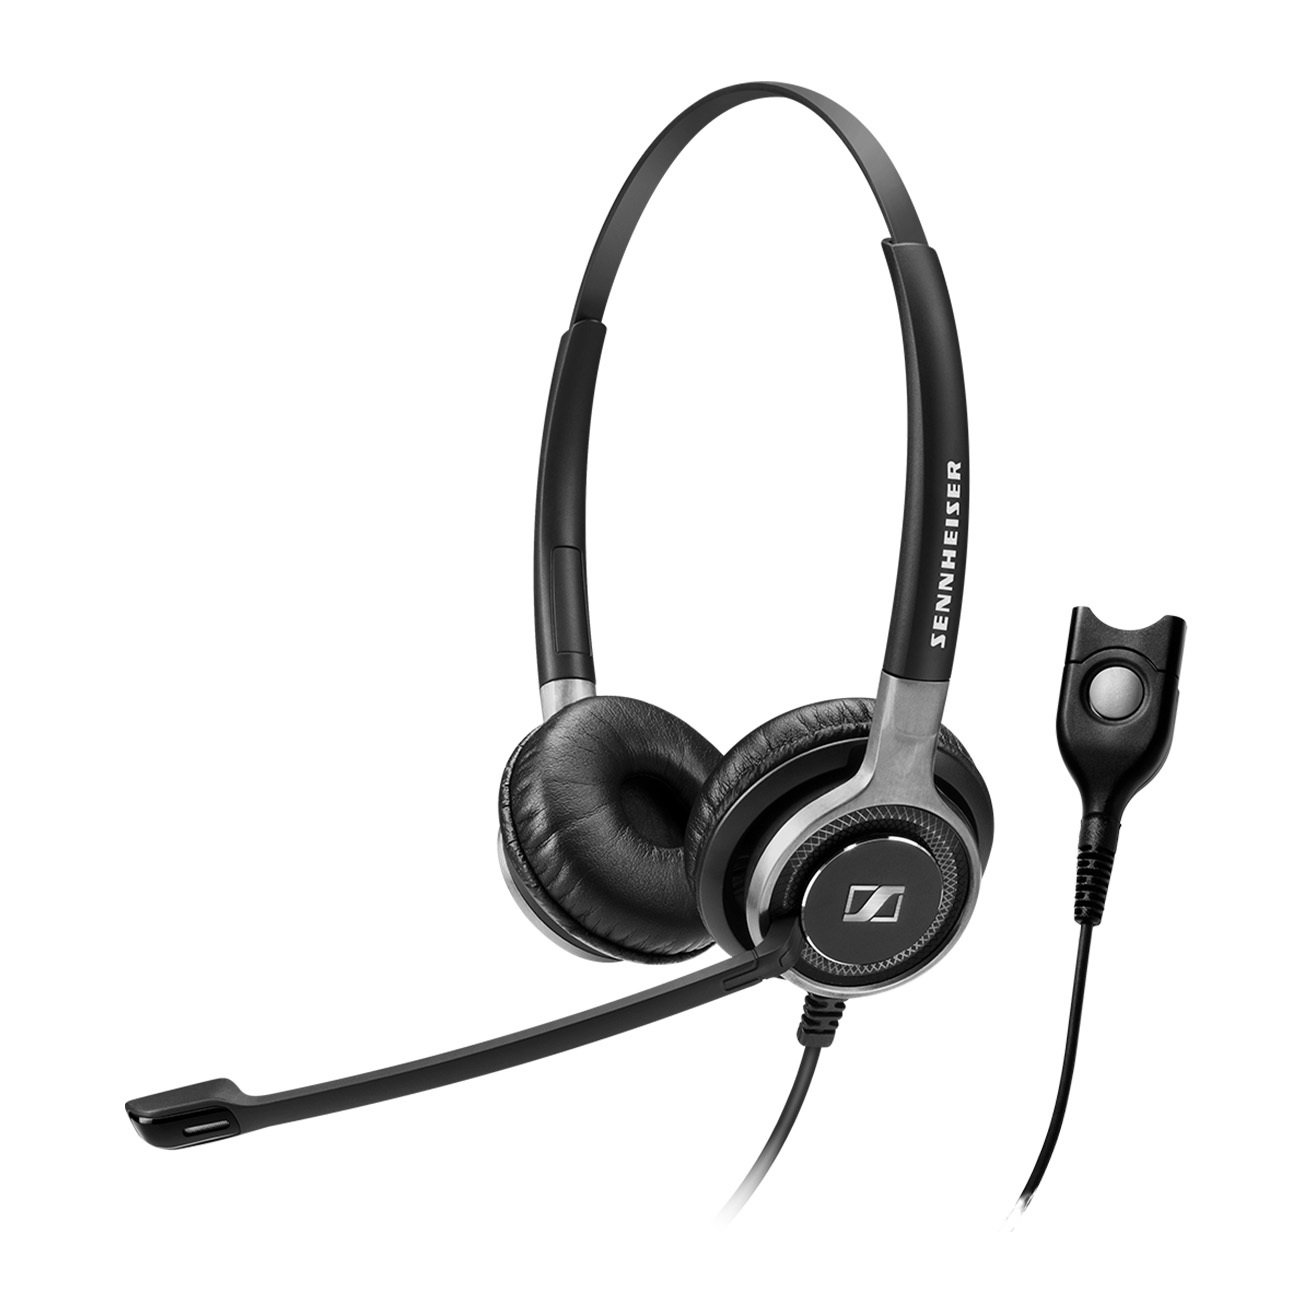 Sennhieser SC 660 TC Telecoil hearing aid wired headset